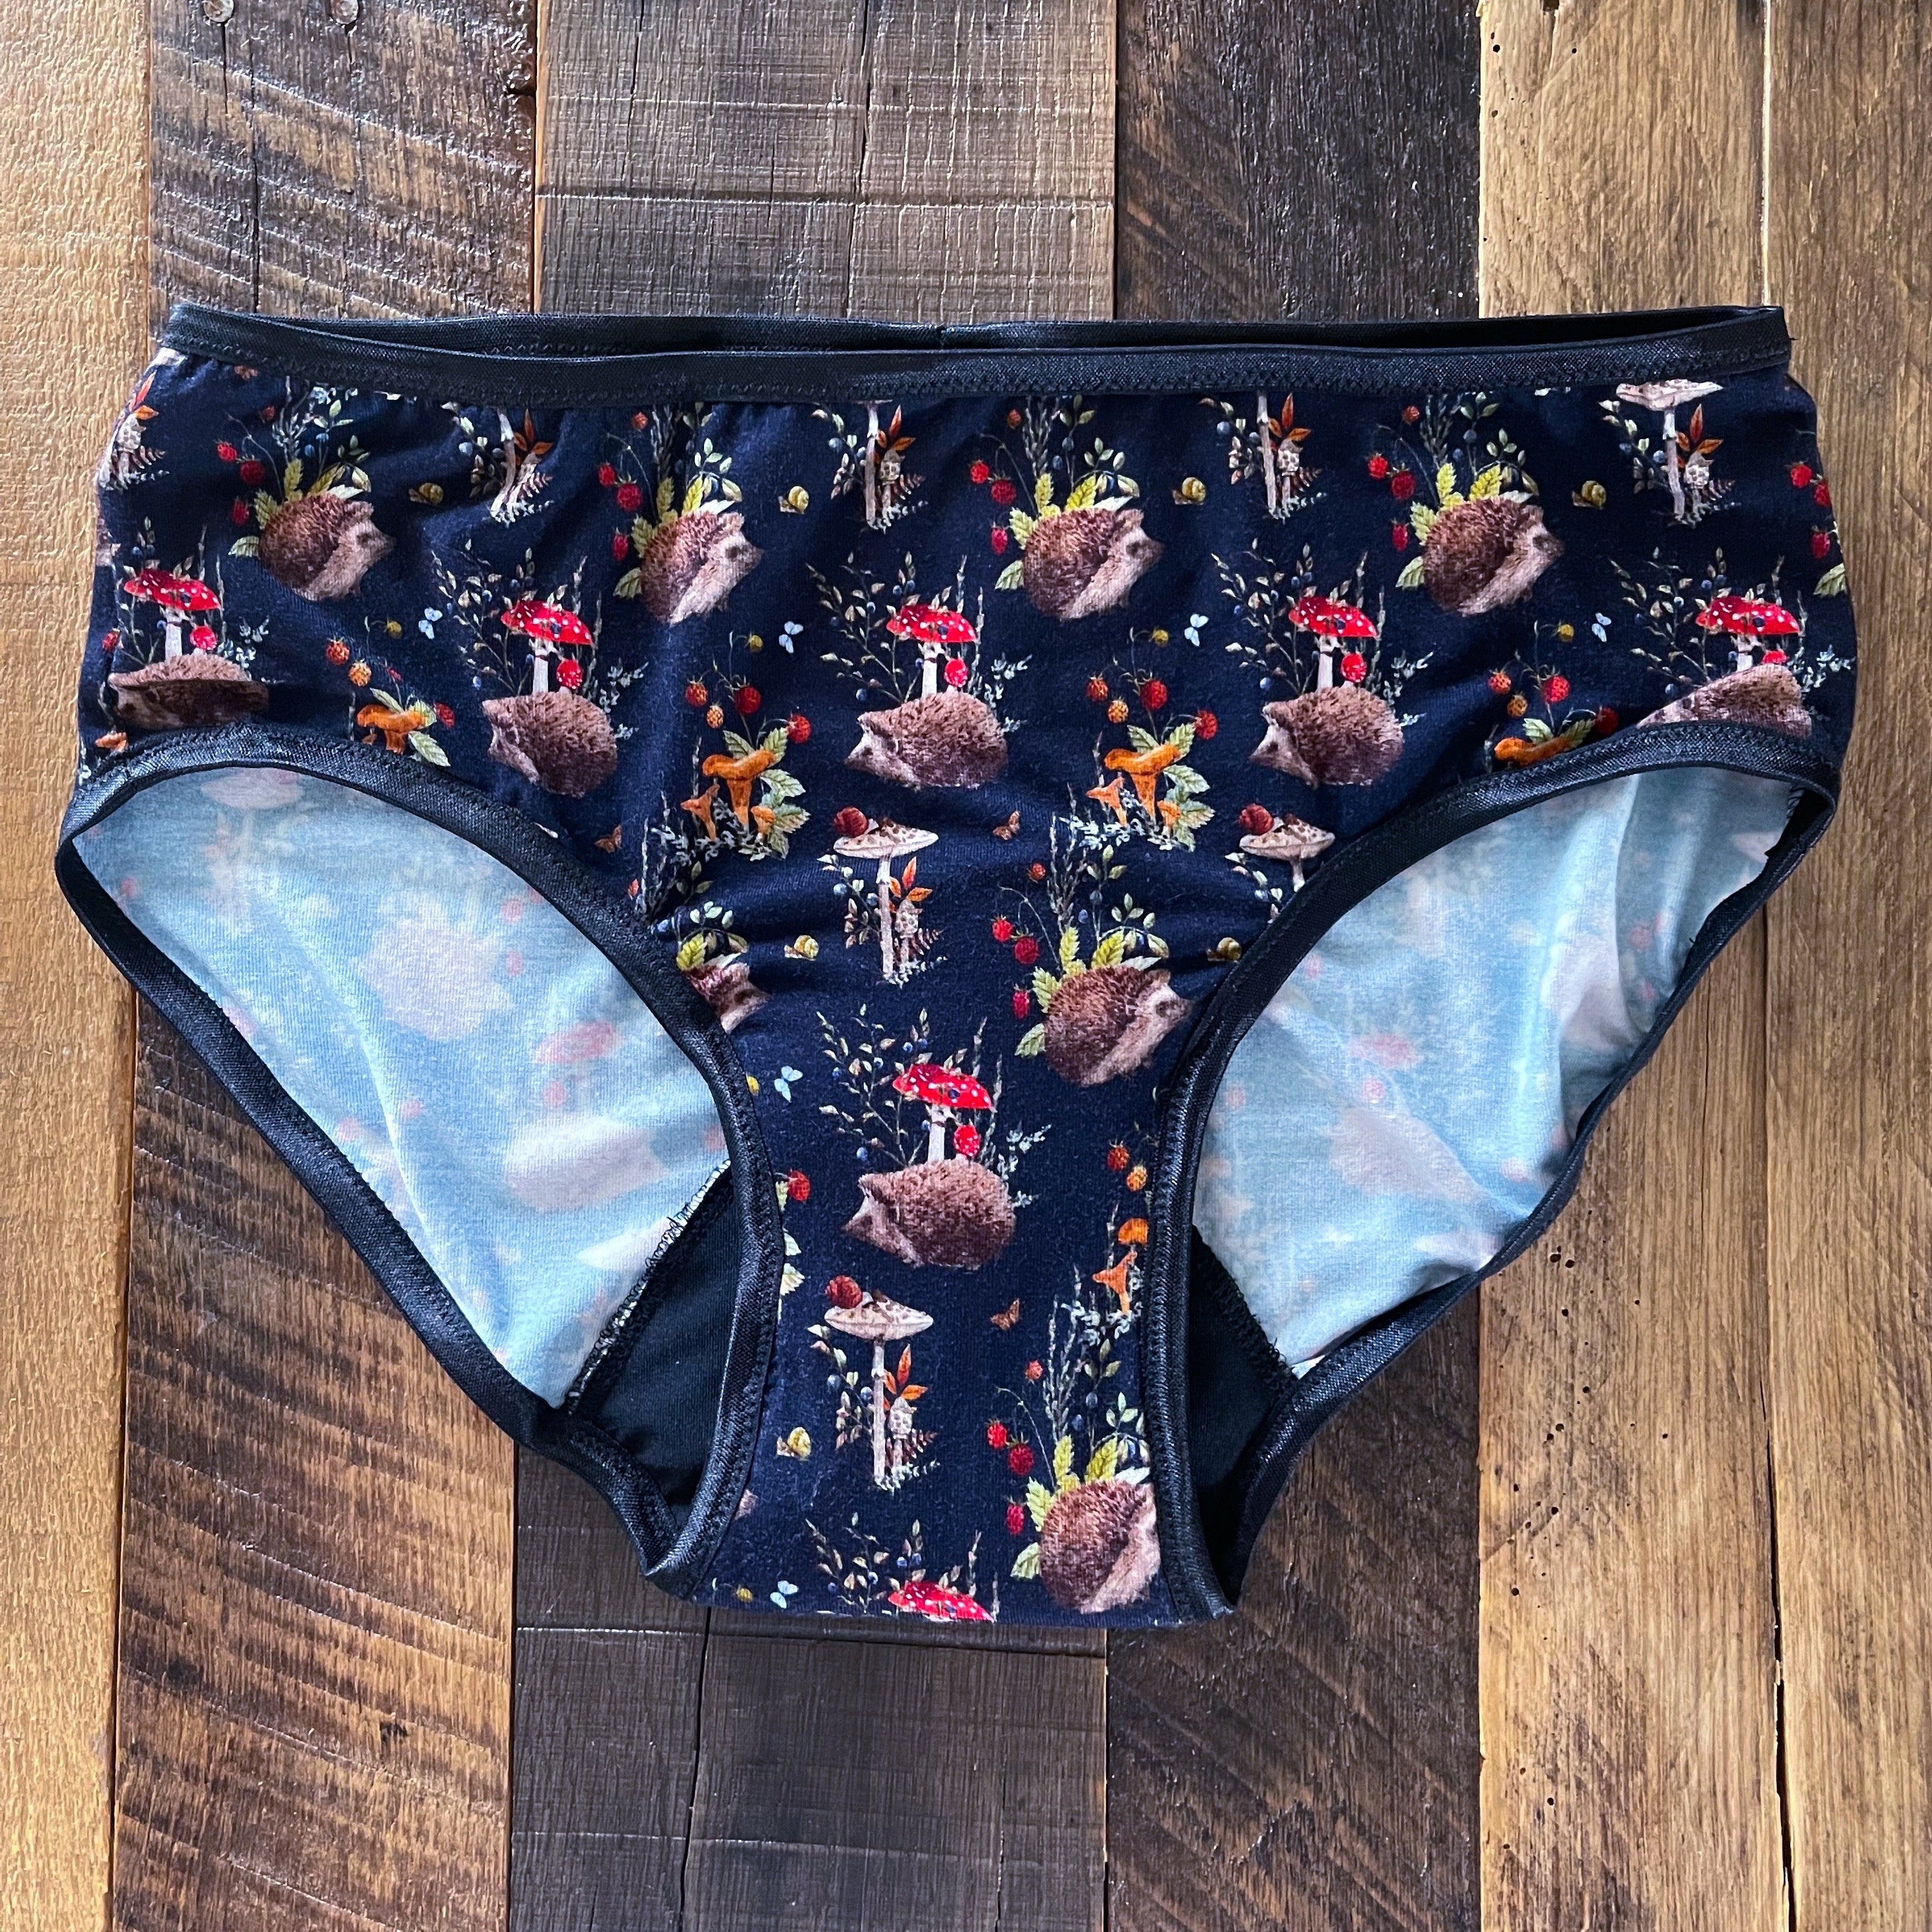 Making your own period panties – Bra Builders